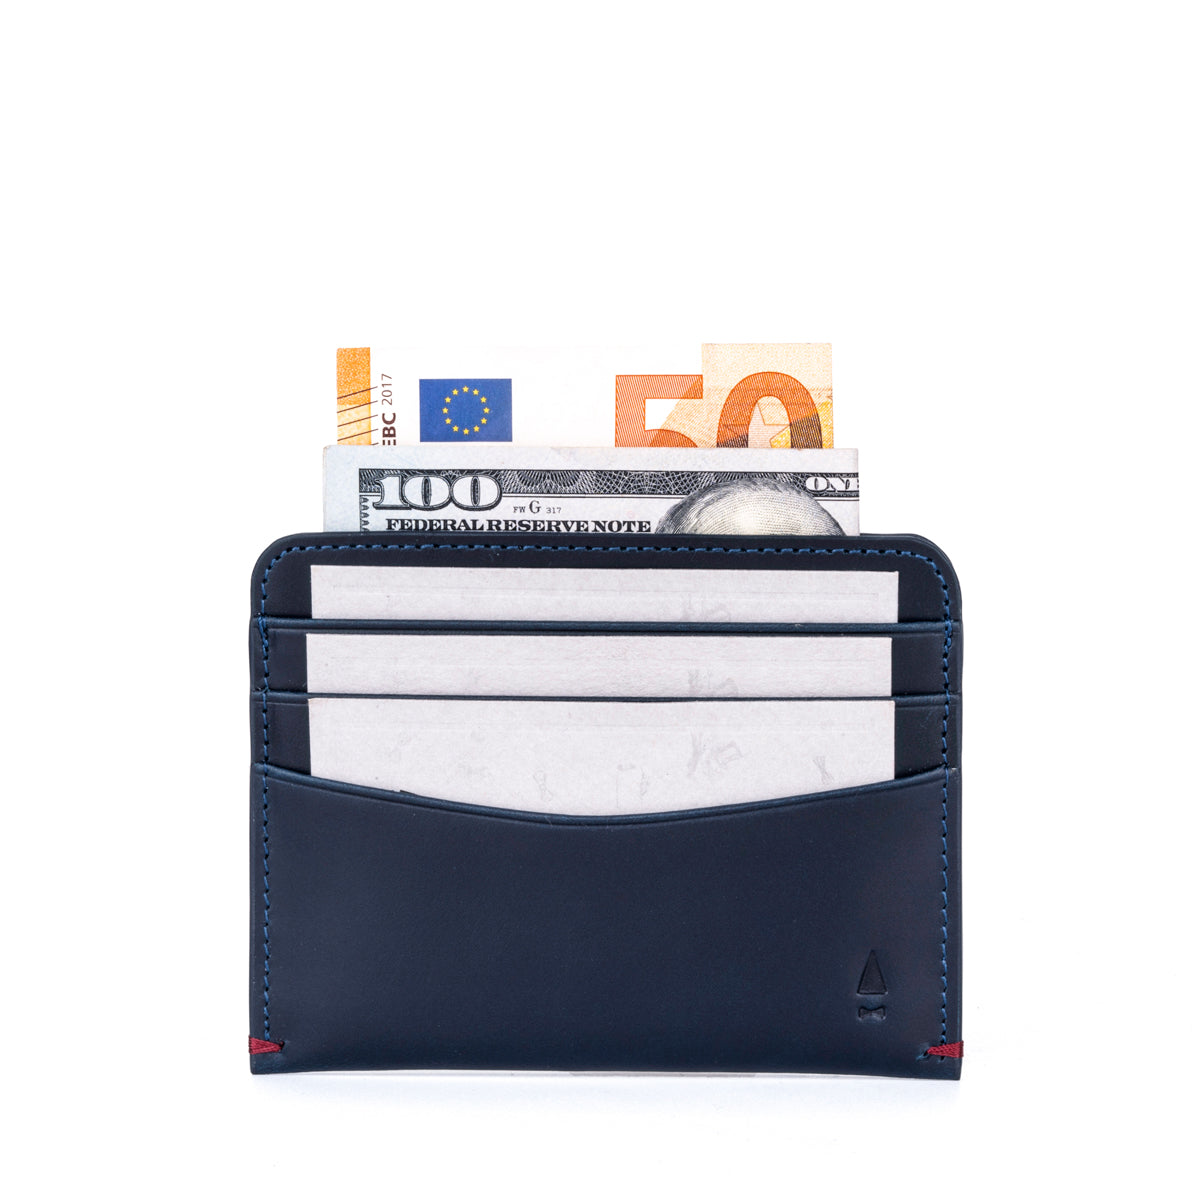 Gulliver Slim Cash Card Holder Wallet (RFID USA Wax Leather)